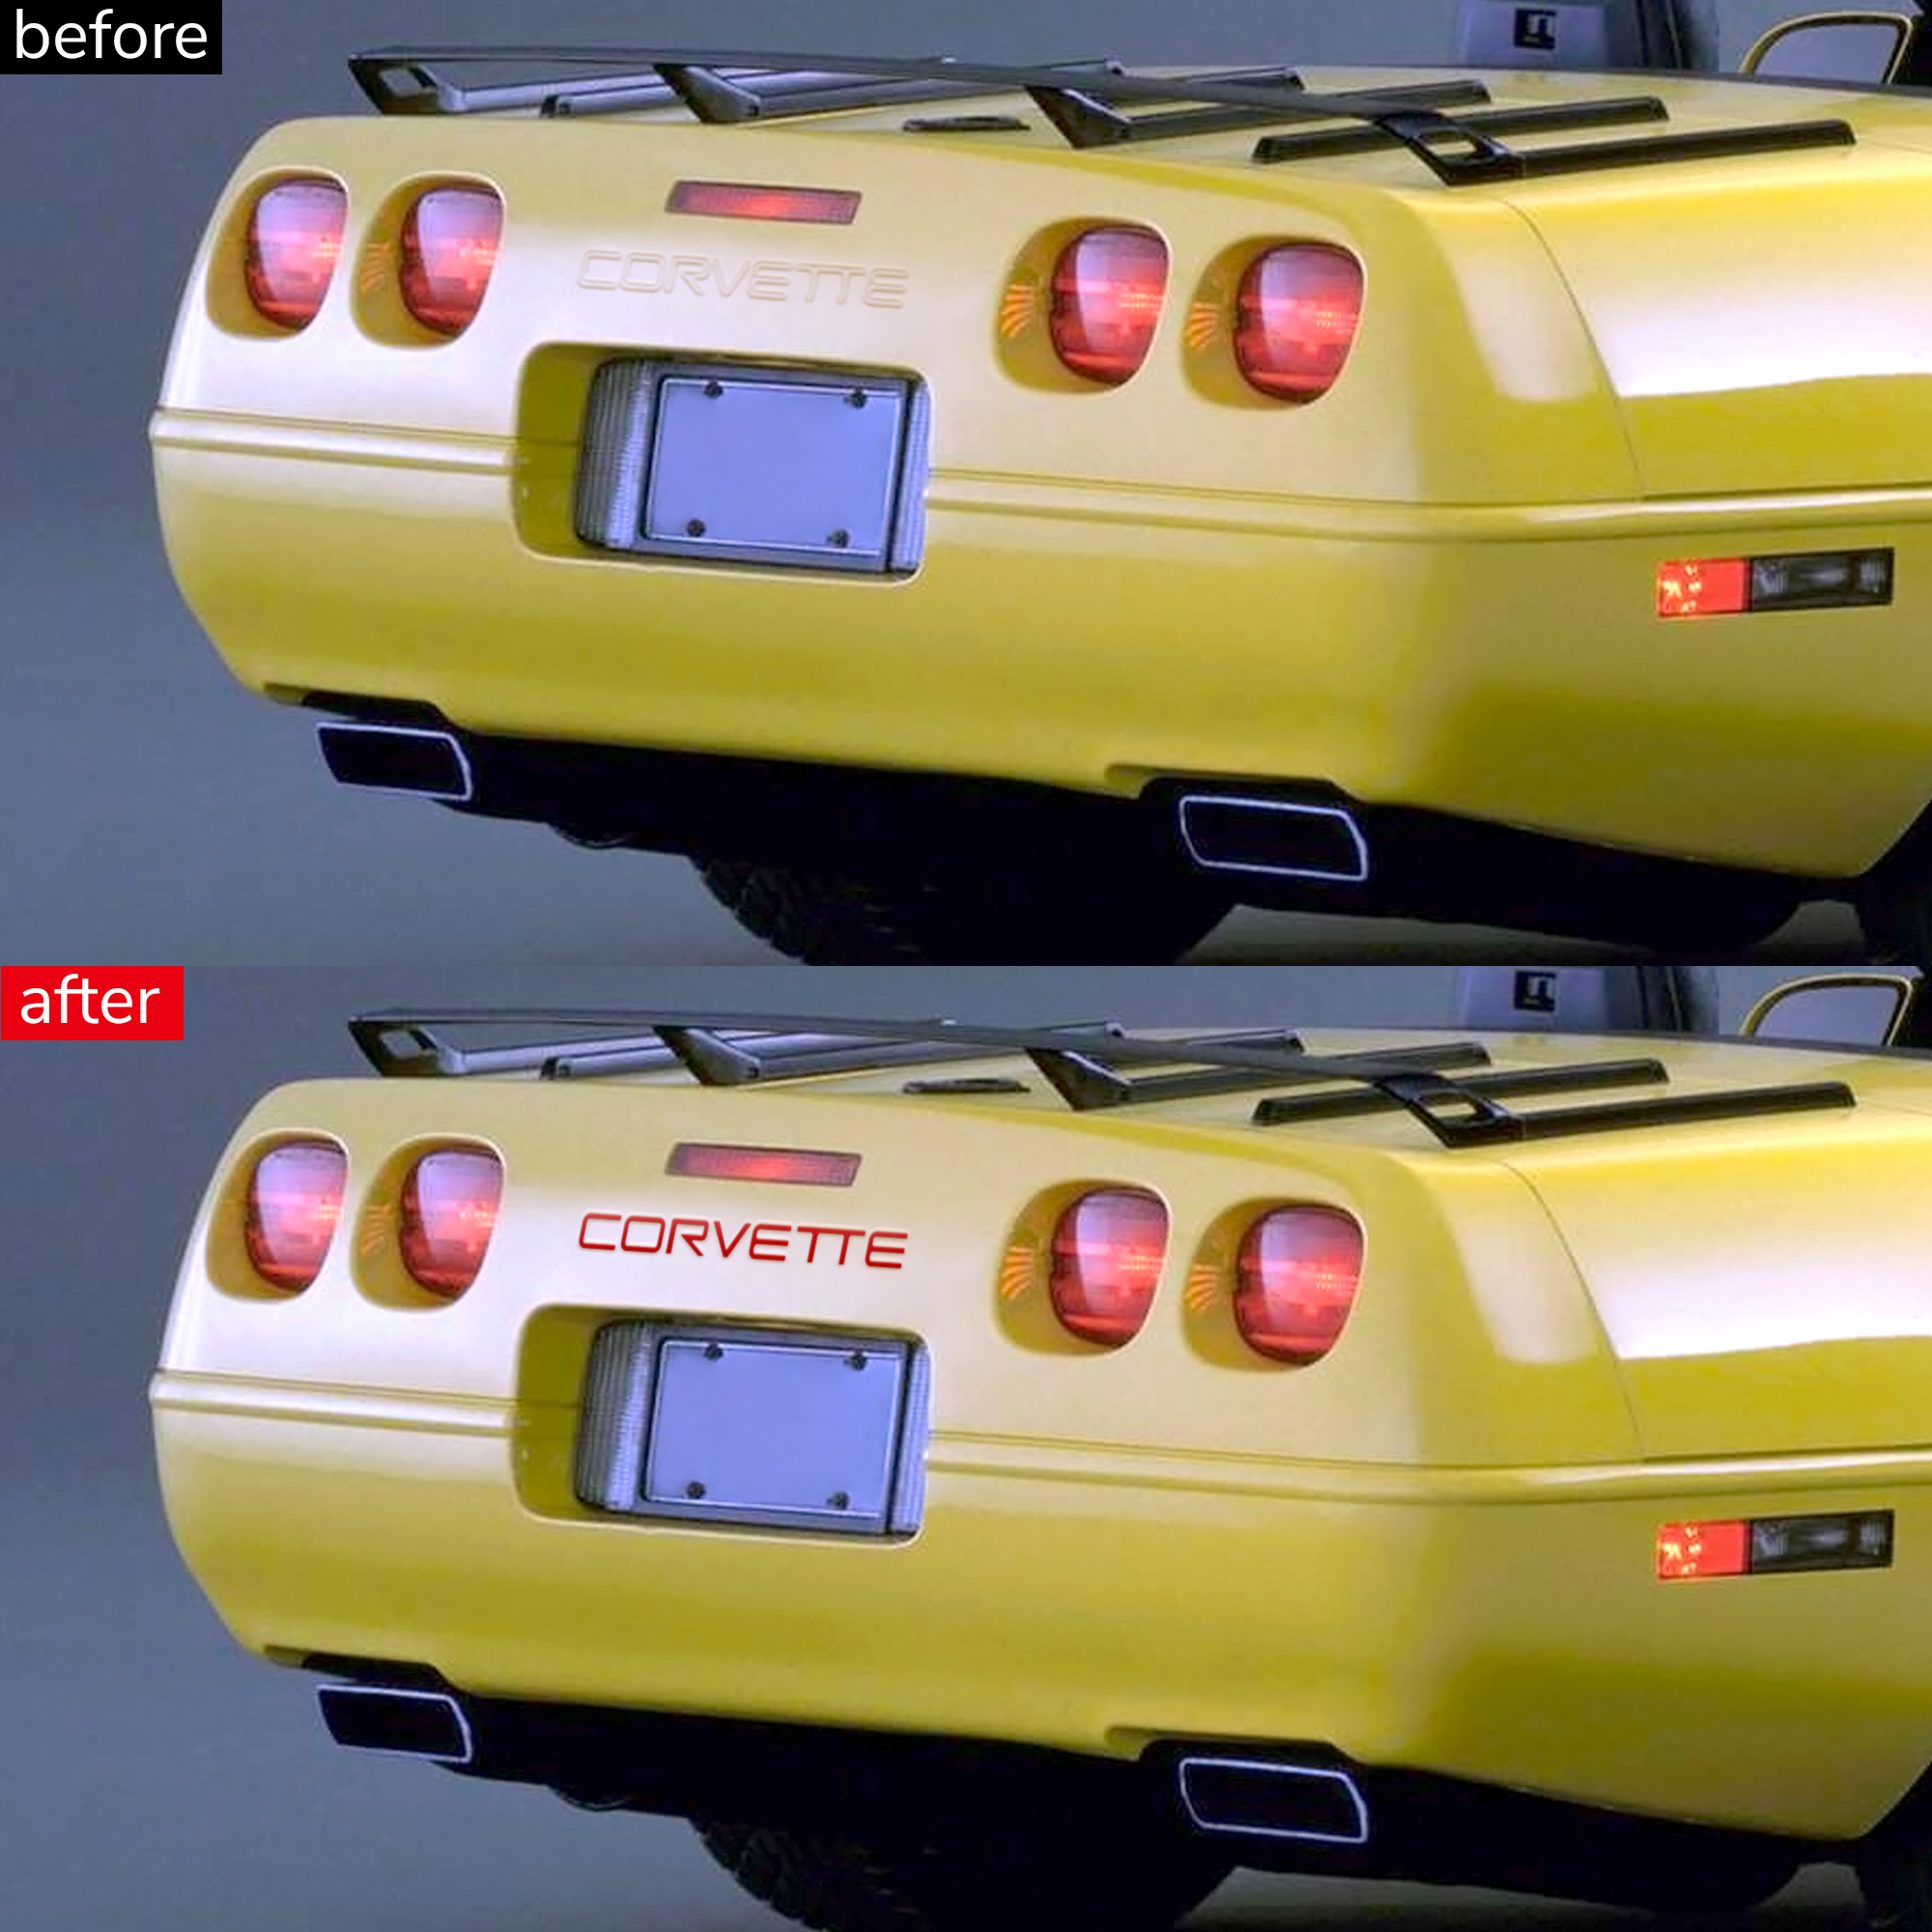 BDTrims Front and Rear Bumper Raised Letters Compatible with 1991-1996 Corvette C4 Models Black 